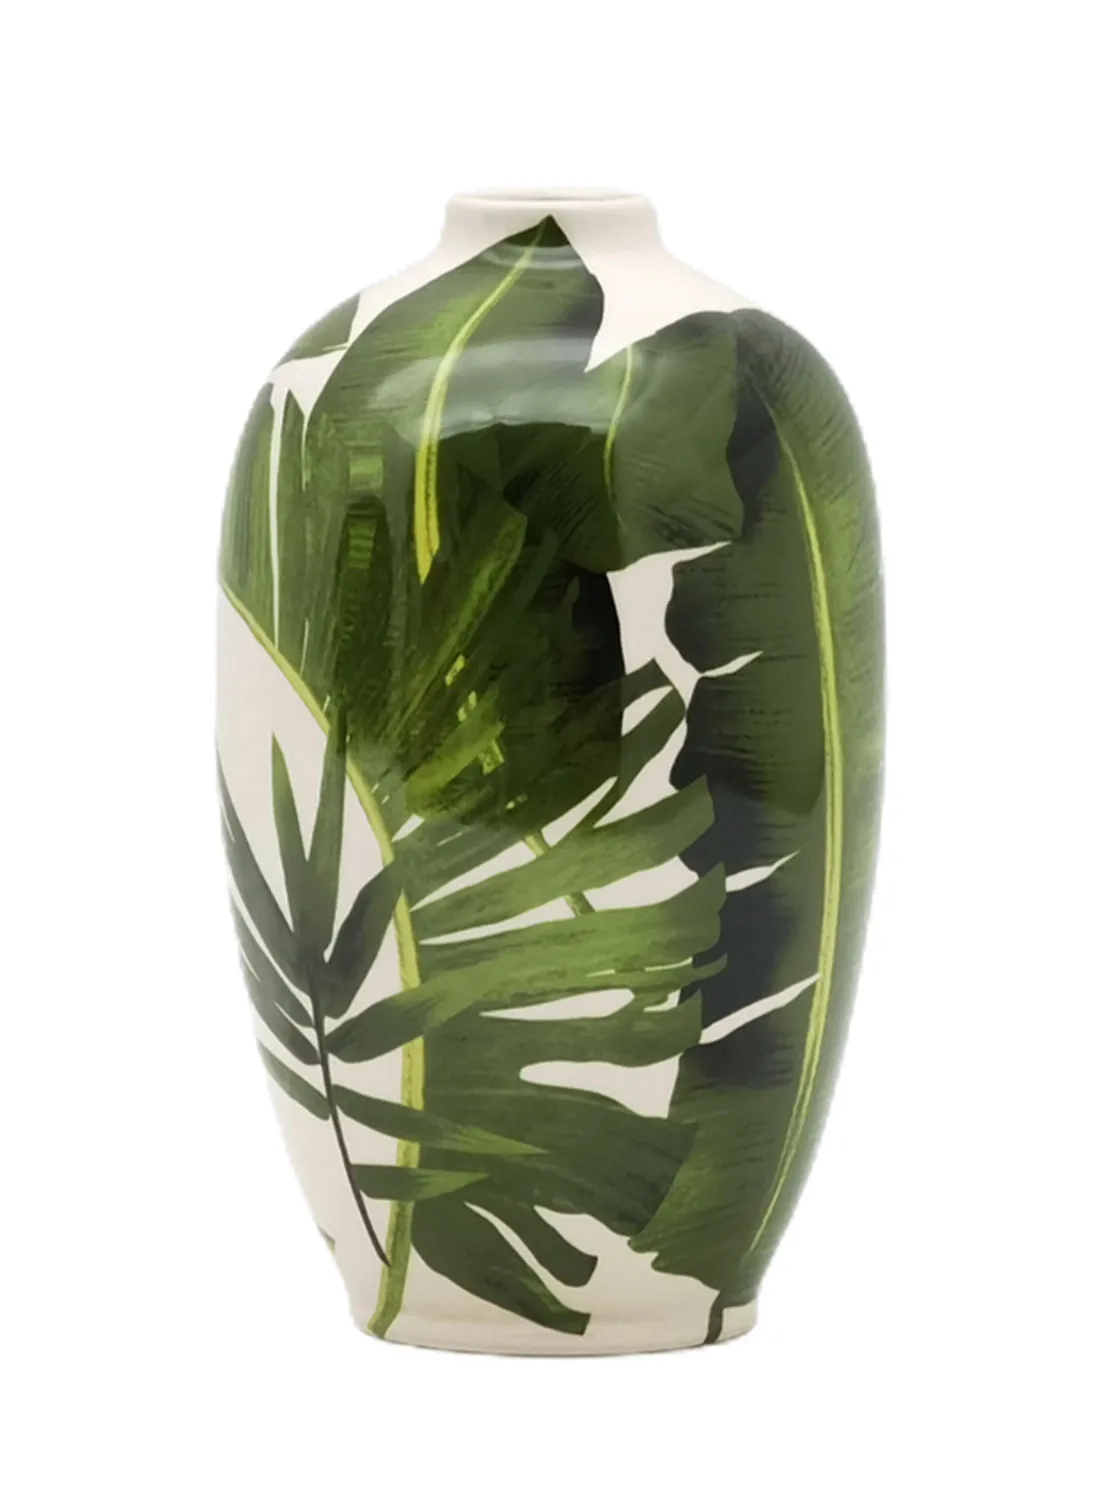 ebb & flow Elegant Design Ceramic Vase Unique Luxury Quality Material For The Perfect Stylish Home N13-017 Green 15.5 x 29.5cm